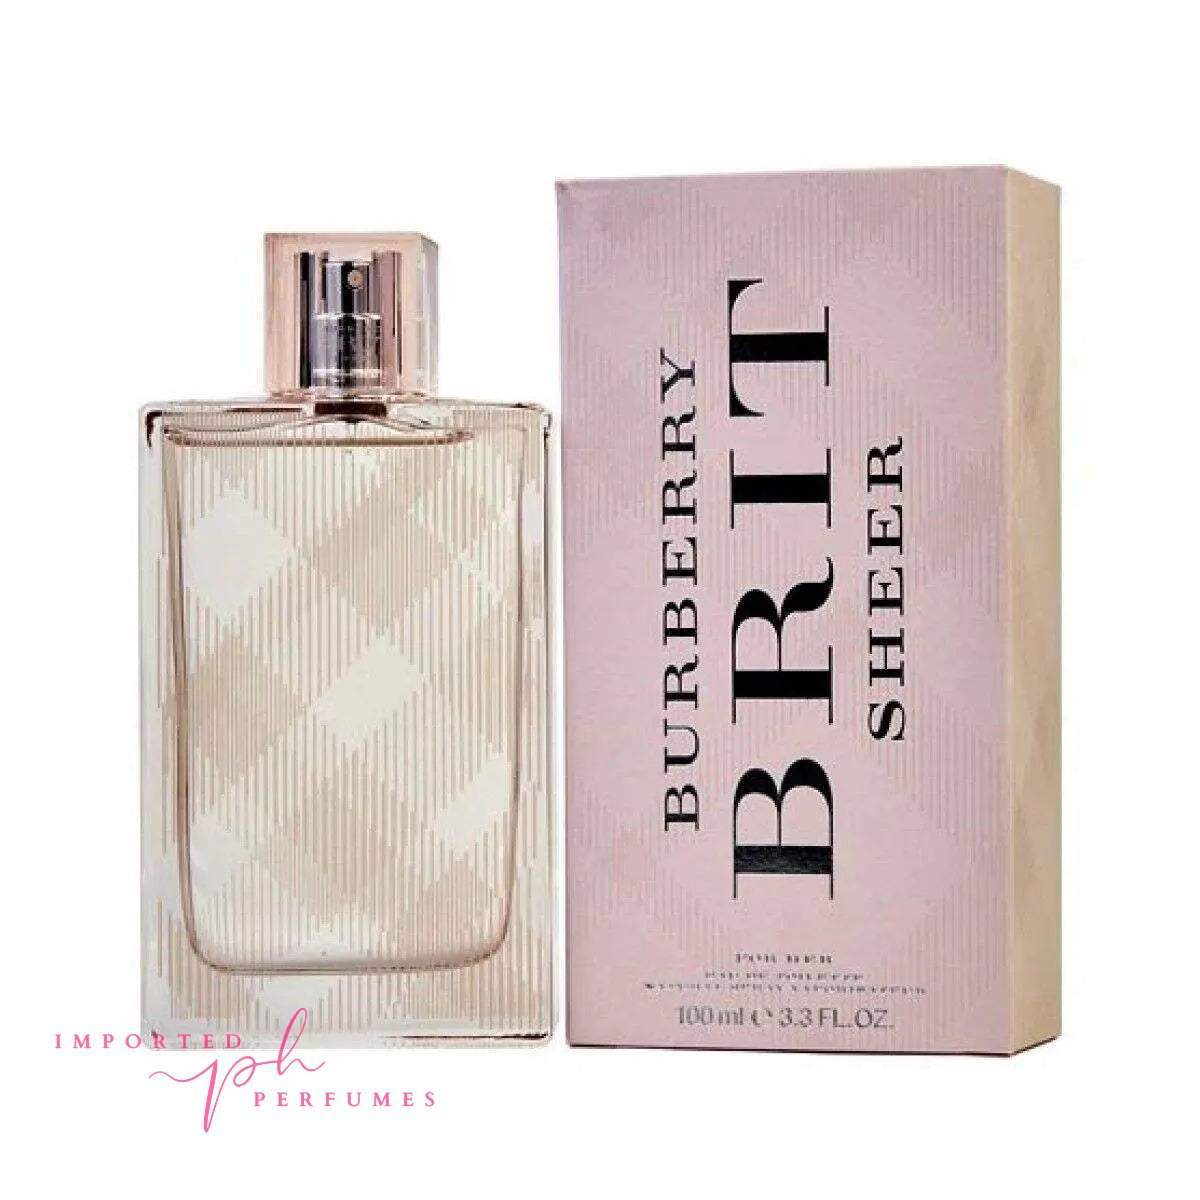 BURBERRY Brit Sheer Eau de Toilette For Her 100ml-Imported Perfumes Co-100ml,200ml,brit,burberry,women